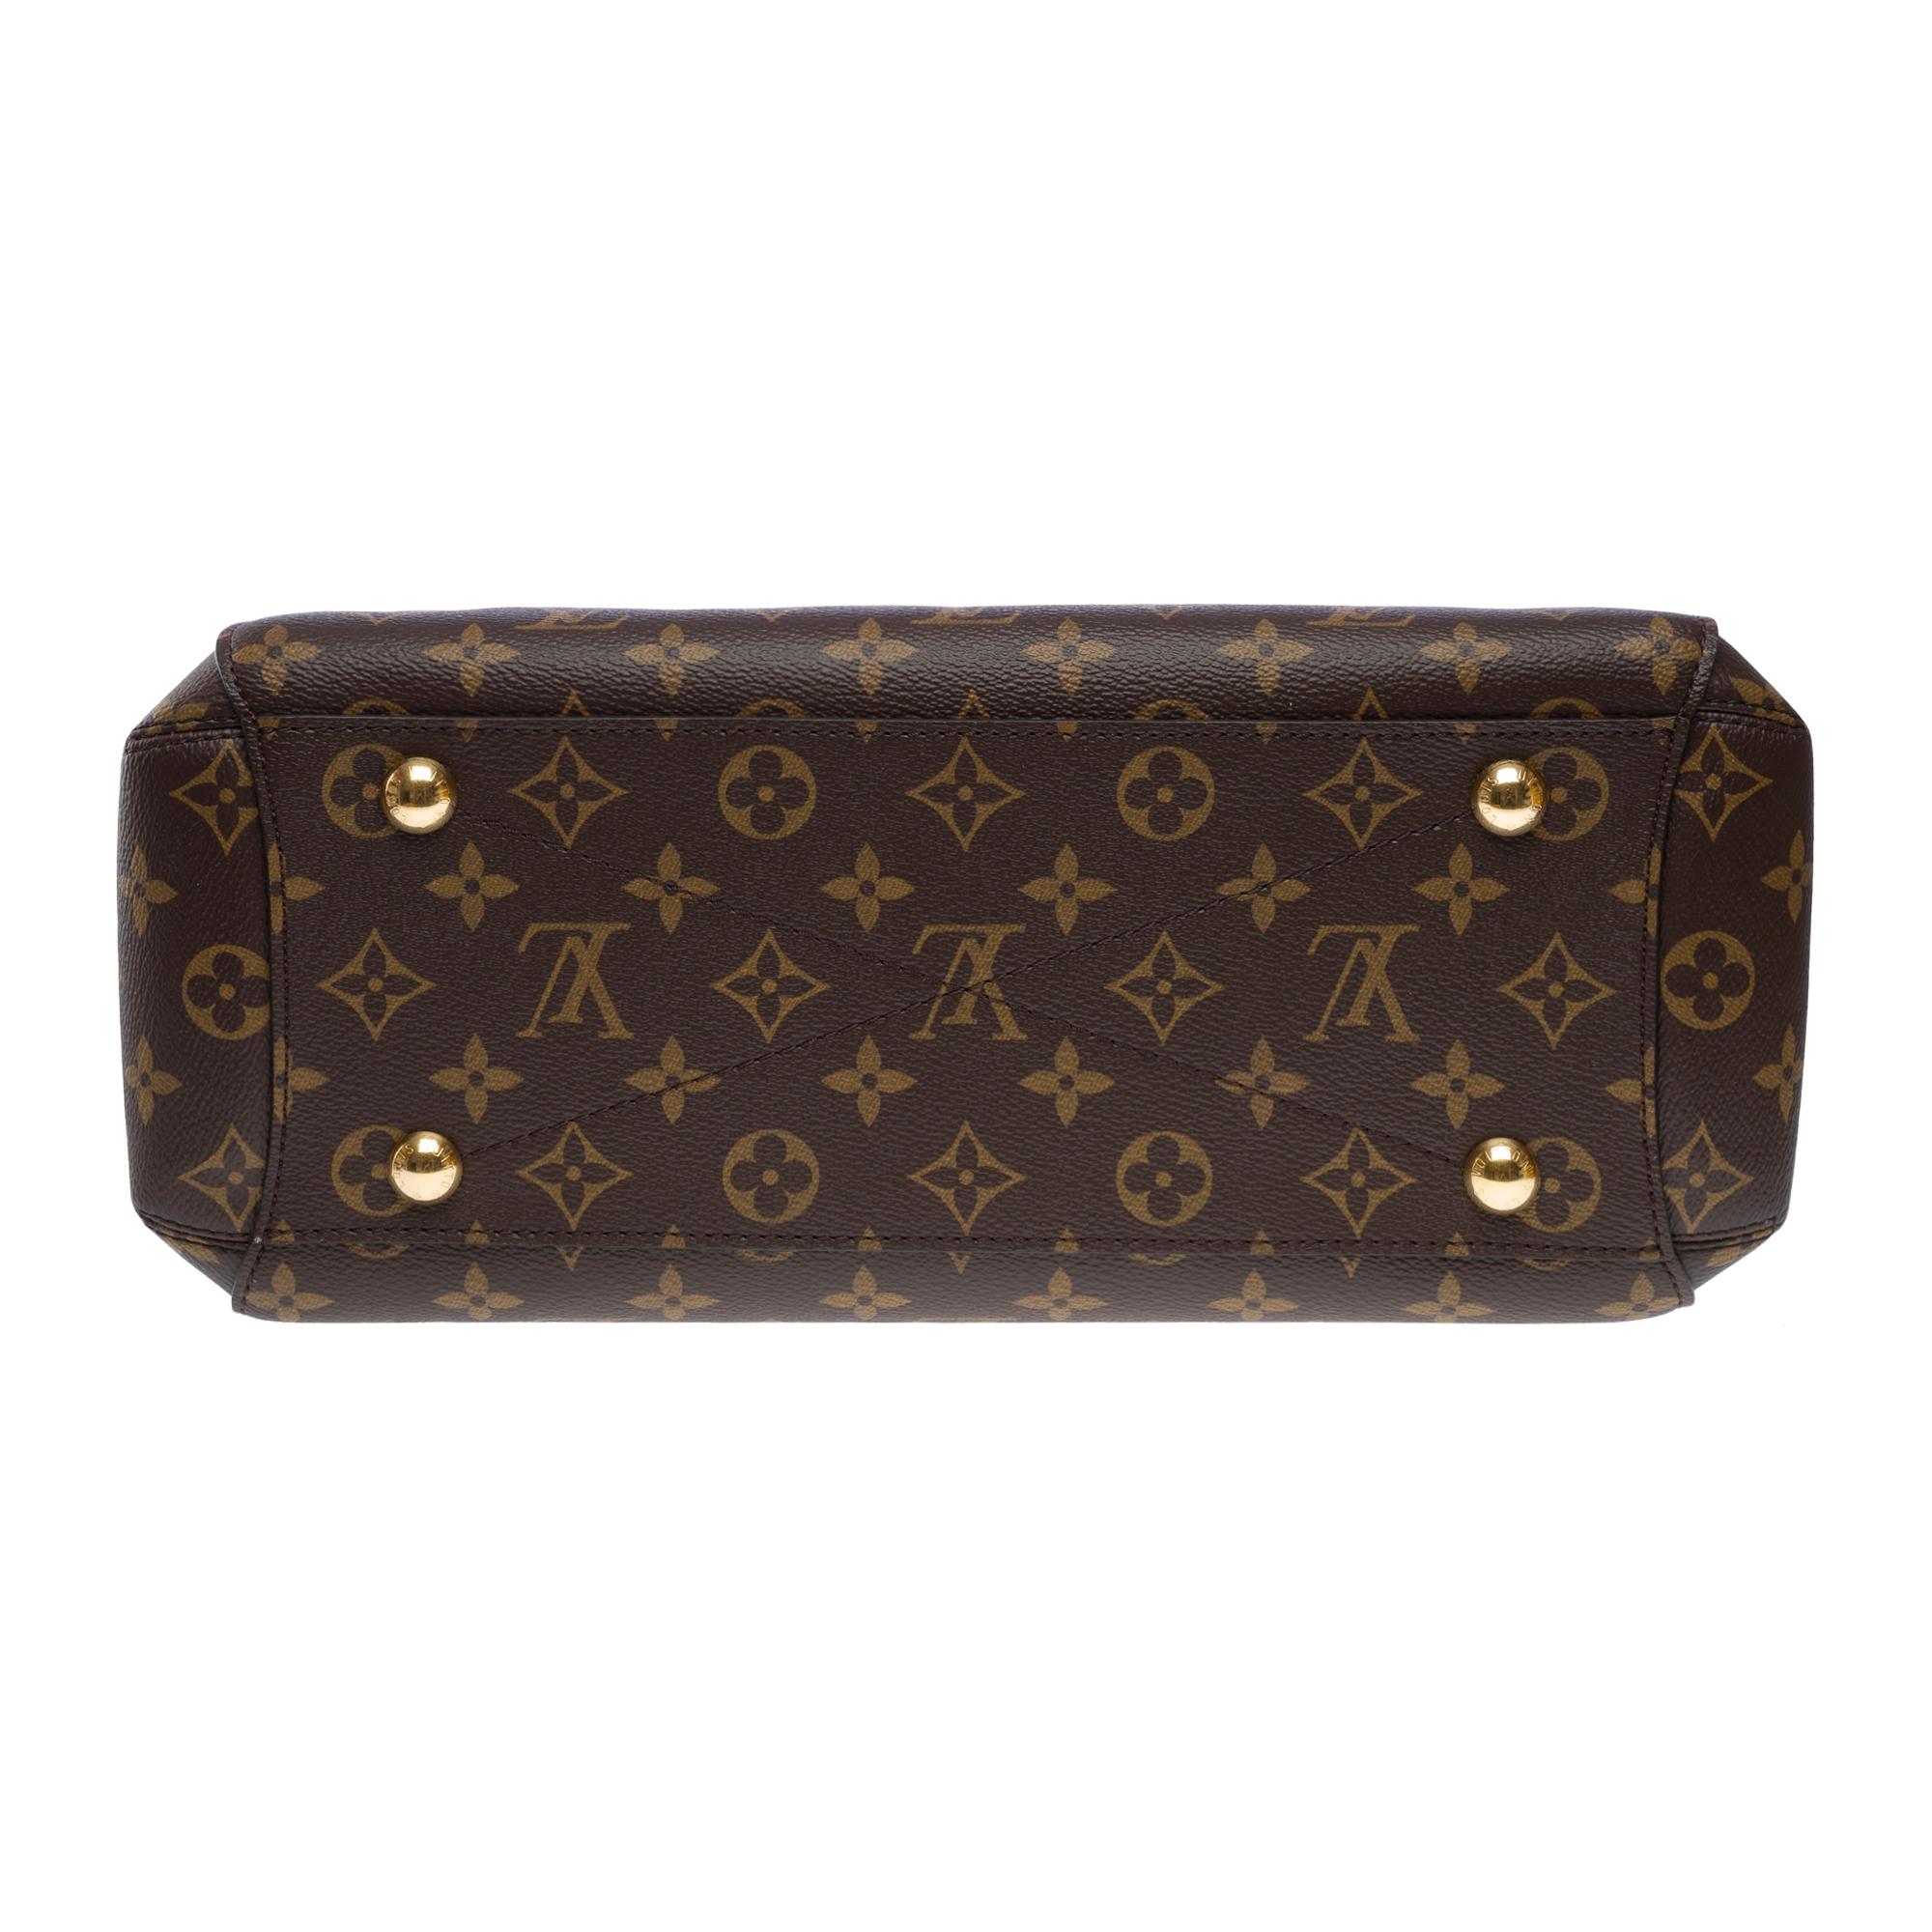 New Louis Vuitton Montaigne MM handbag strap in brown monogram canvas, GHW For Sale 5